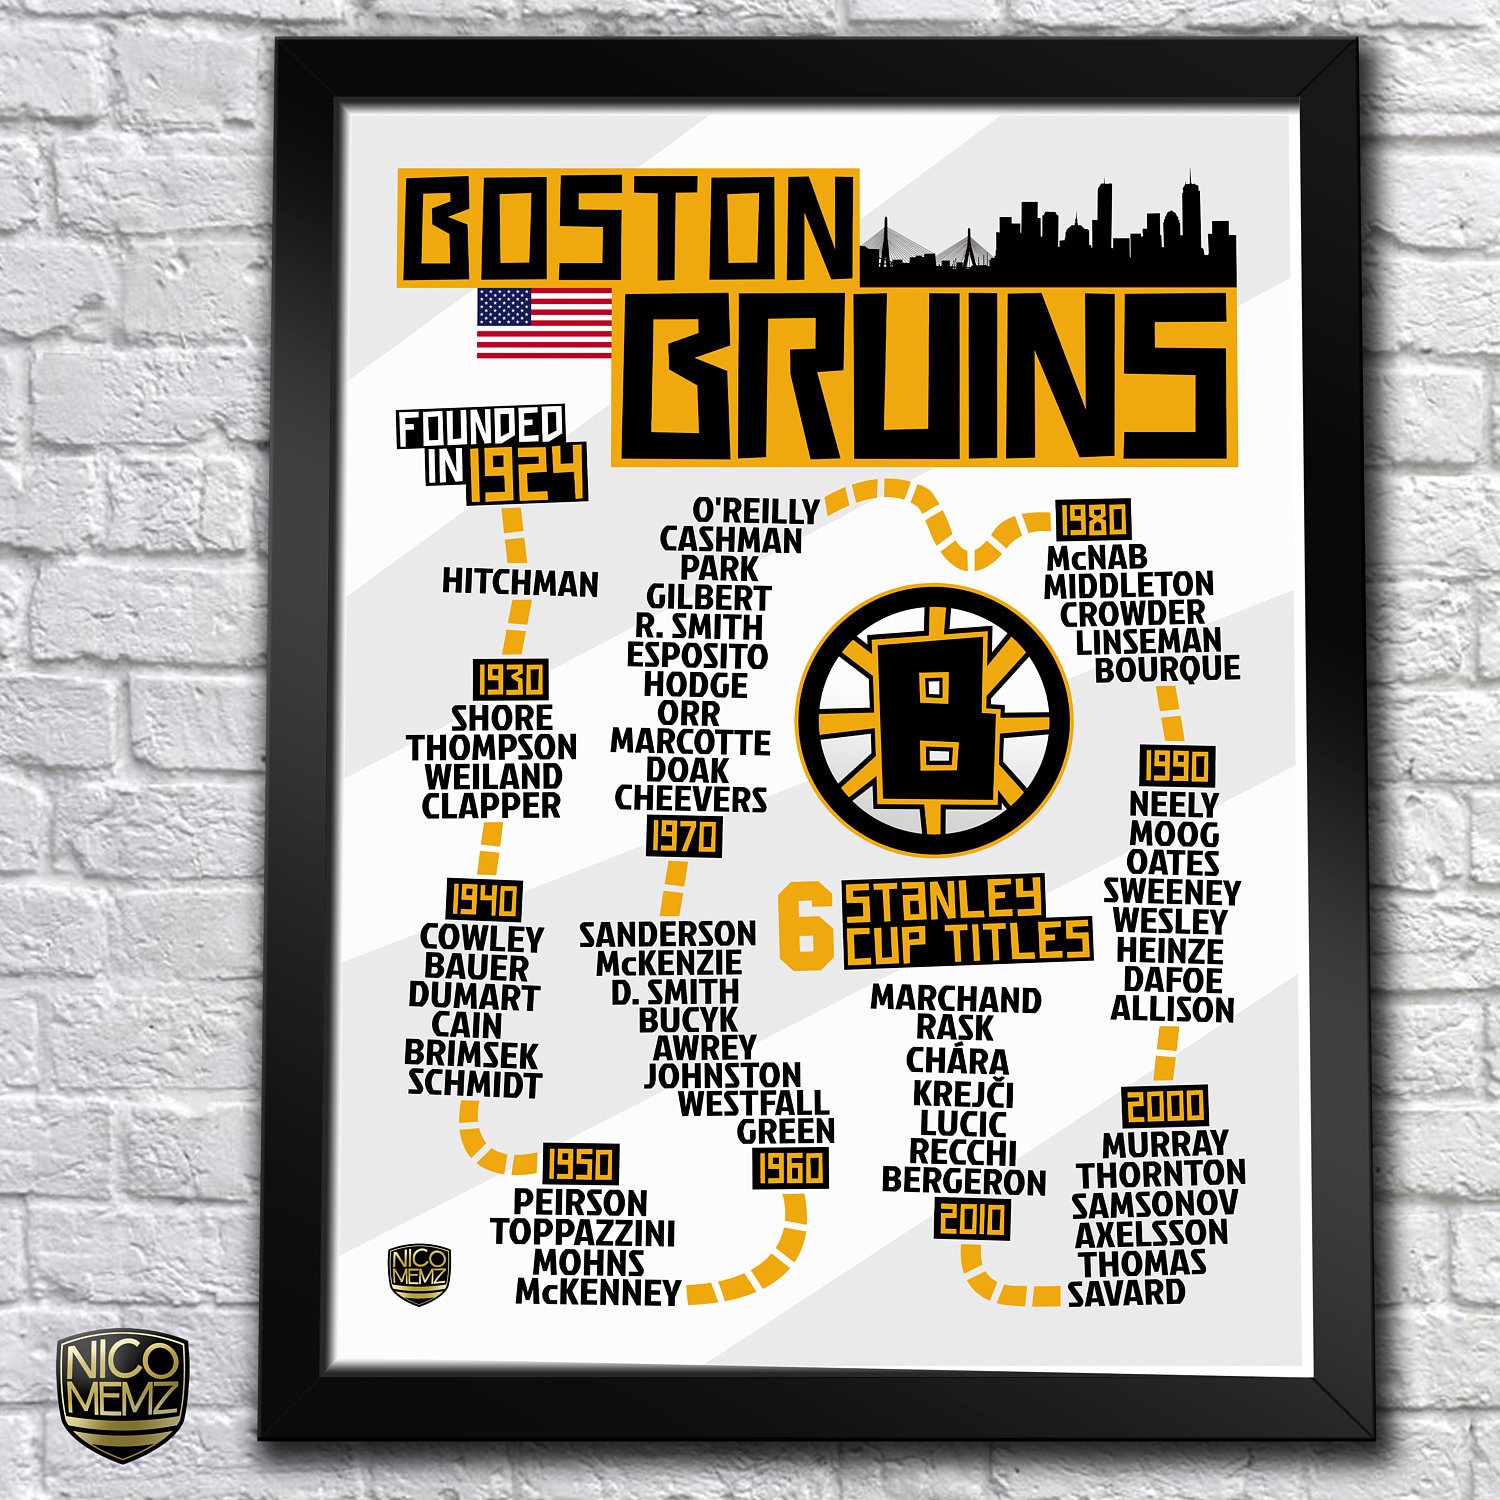 Bruins jerseys throughout history : r/BostonBruins